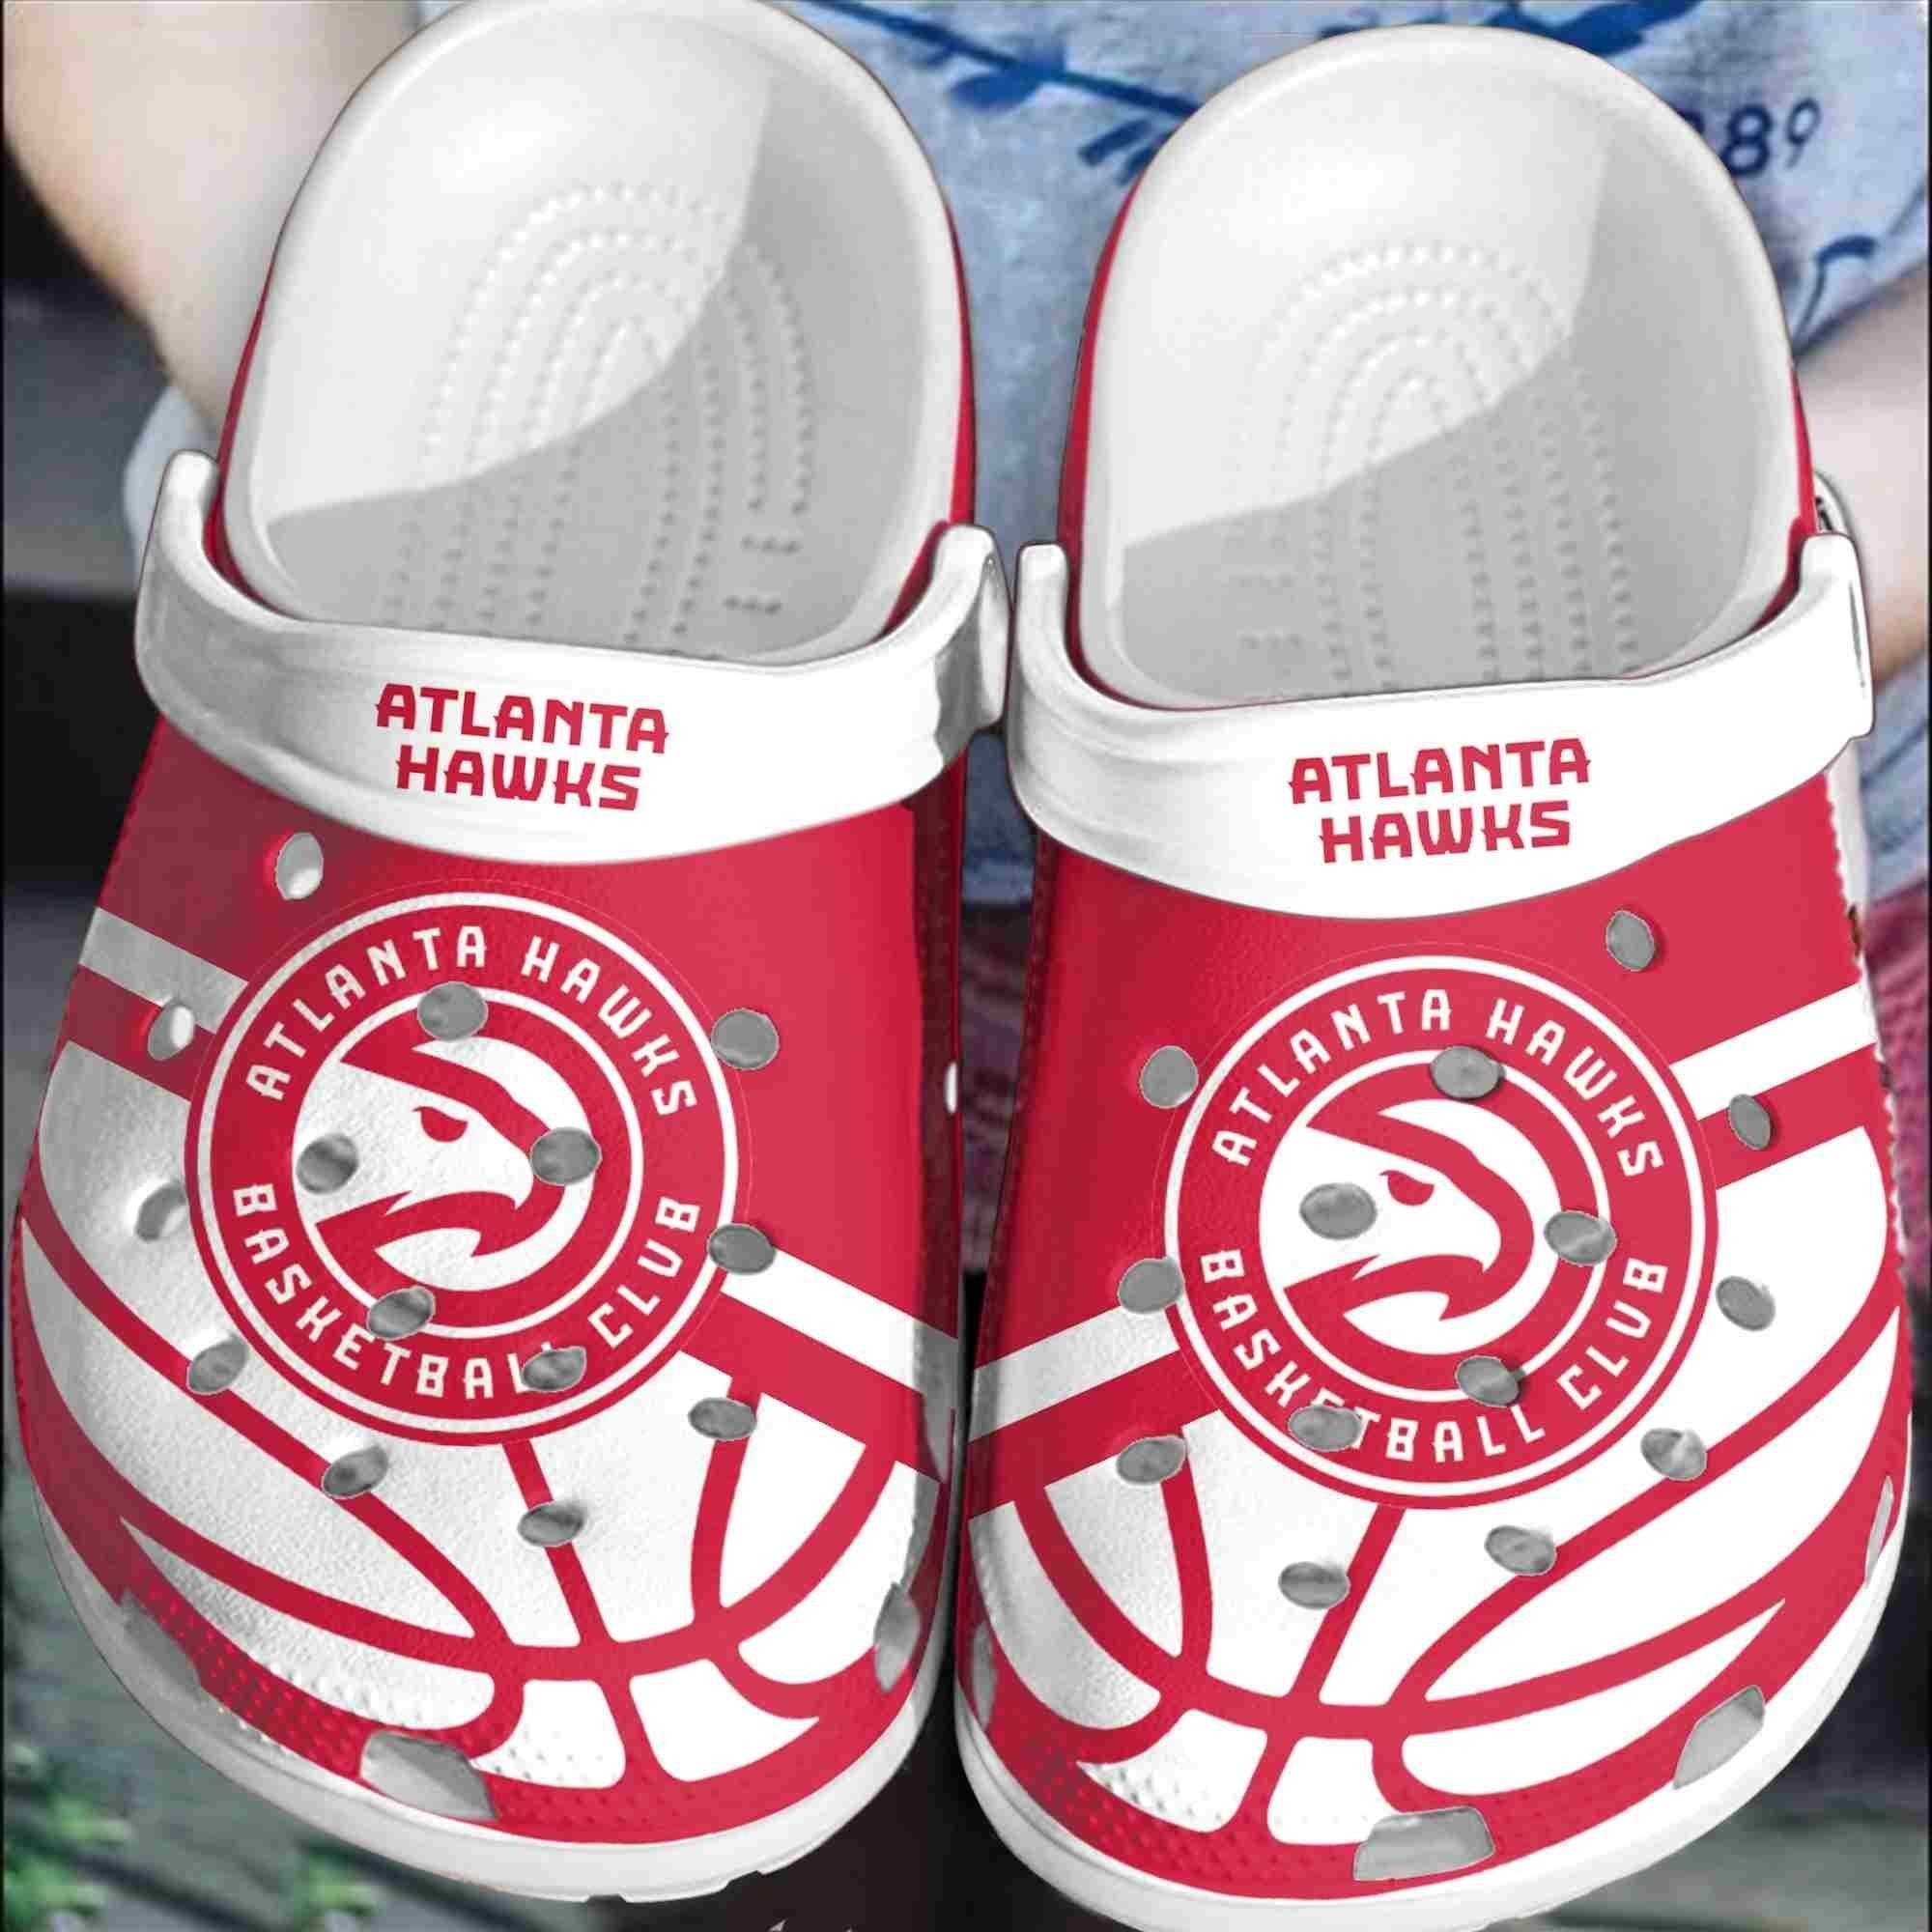 Atlanta Hawks Basketball Club Crocs New Styles - Discover Comfort And ...